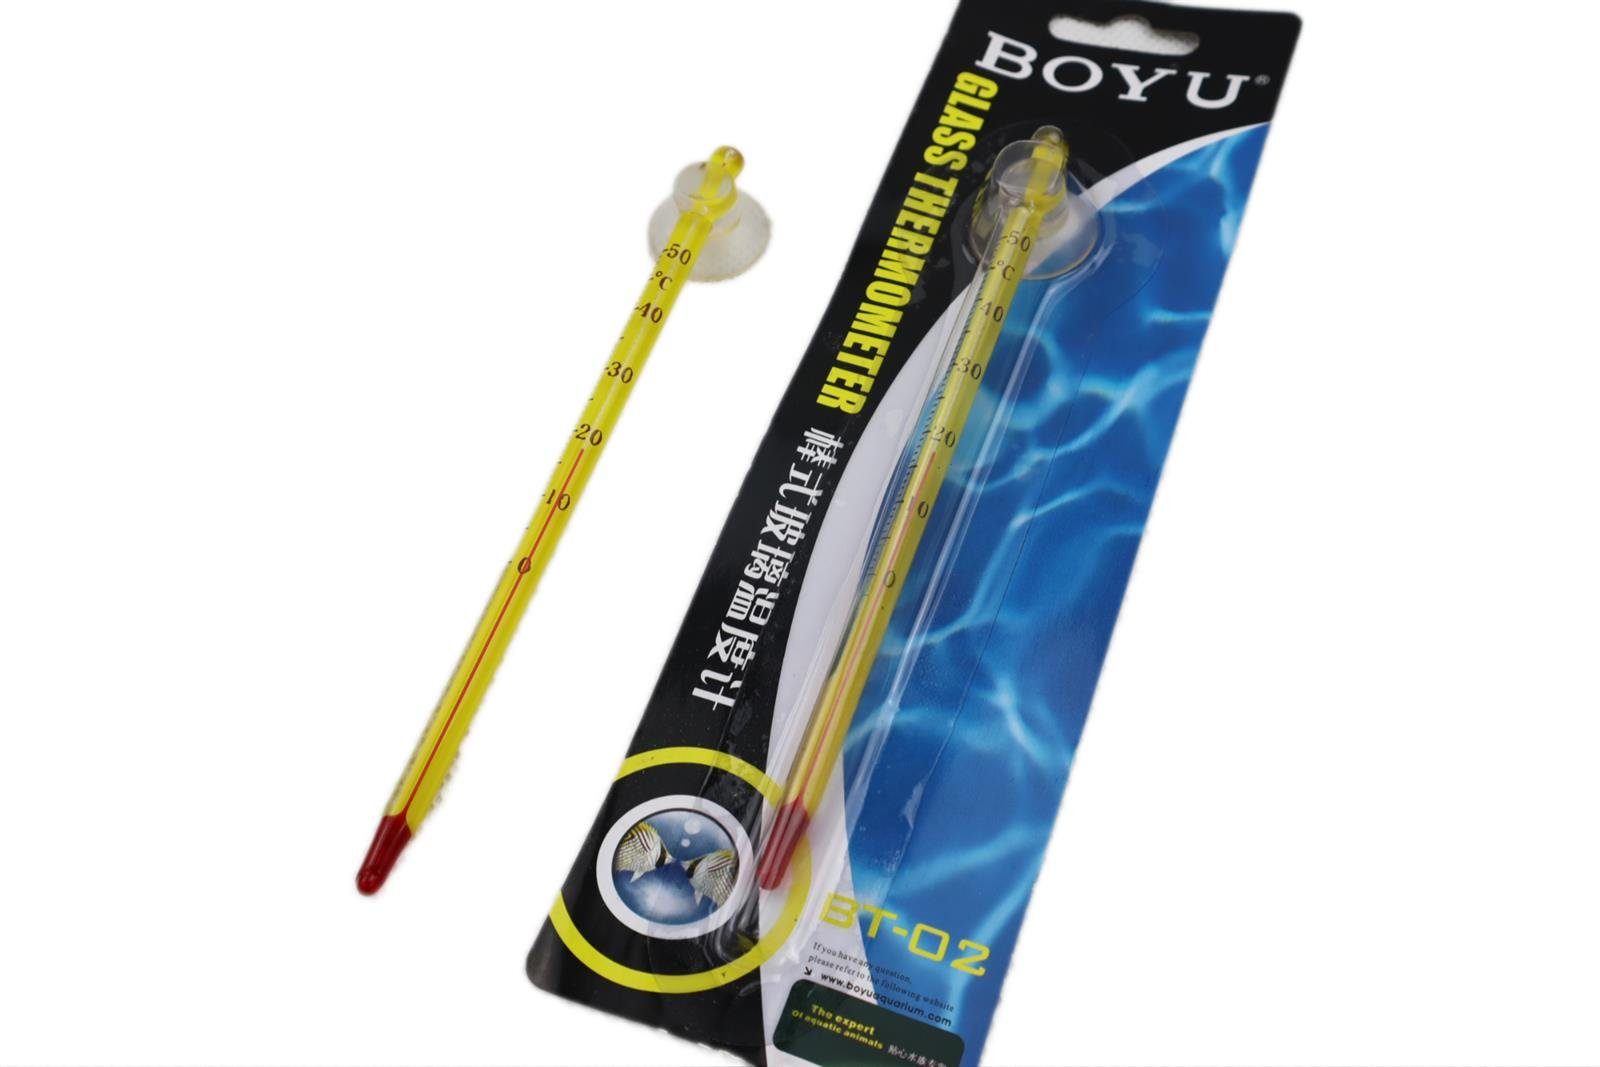 Boyu Аквариумный термометр Aquarien Термометр Premium Präzisionsthermometer 15 cm